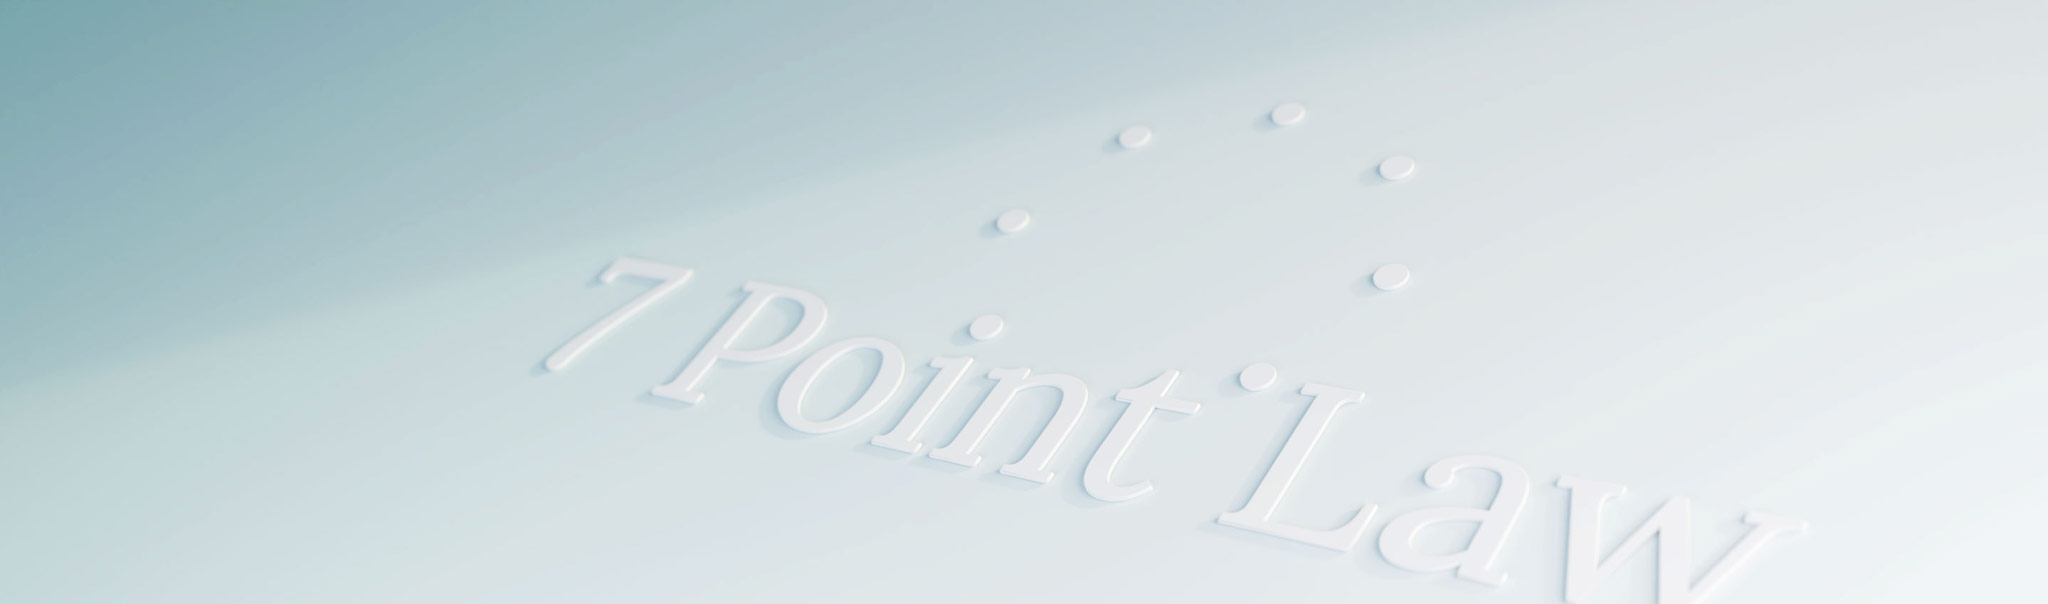 7 Point Law logo design in 3D